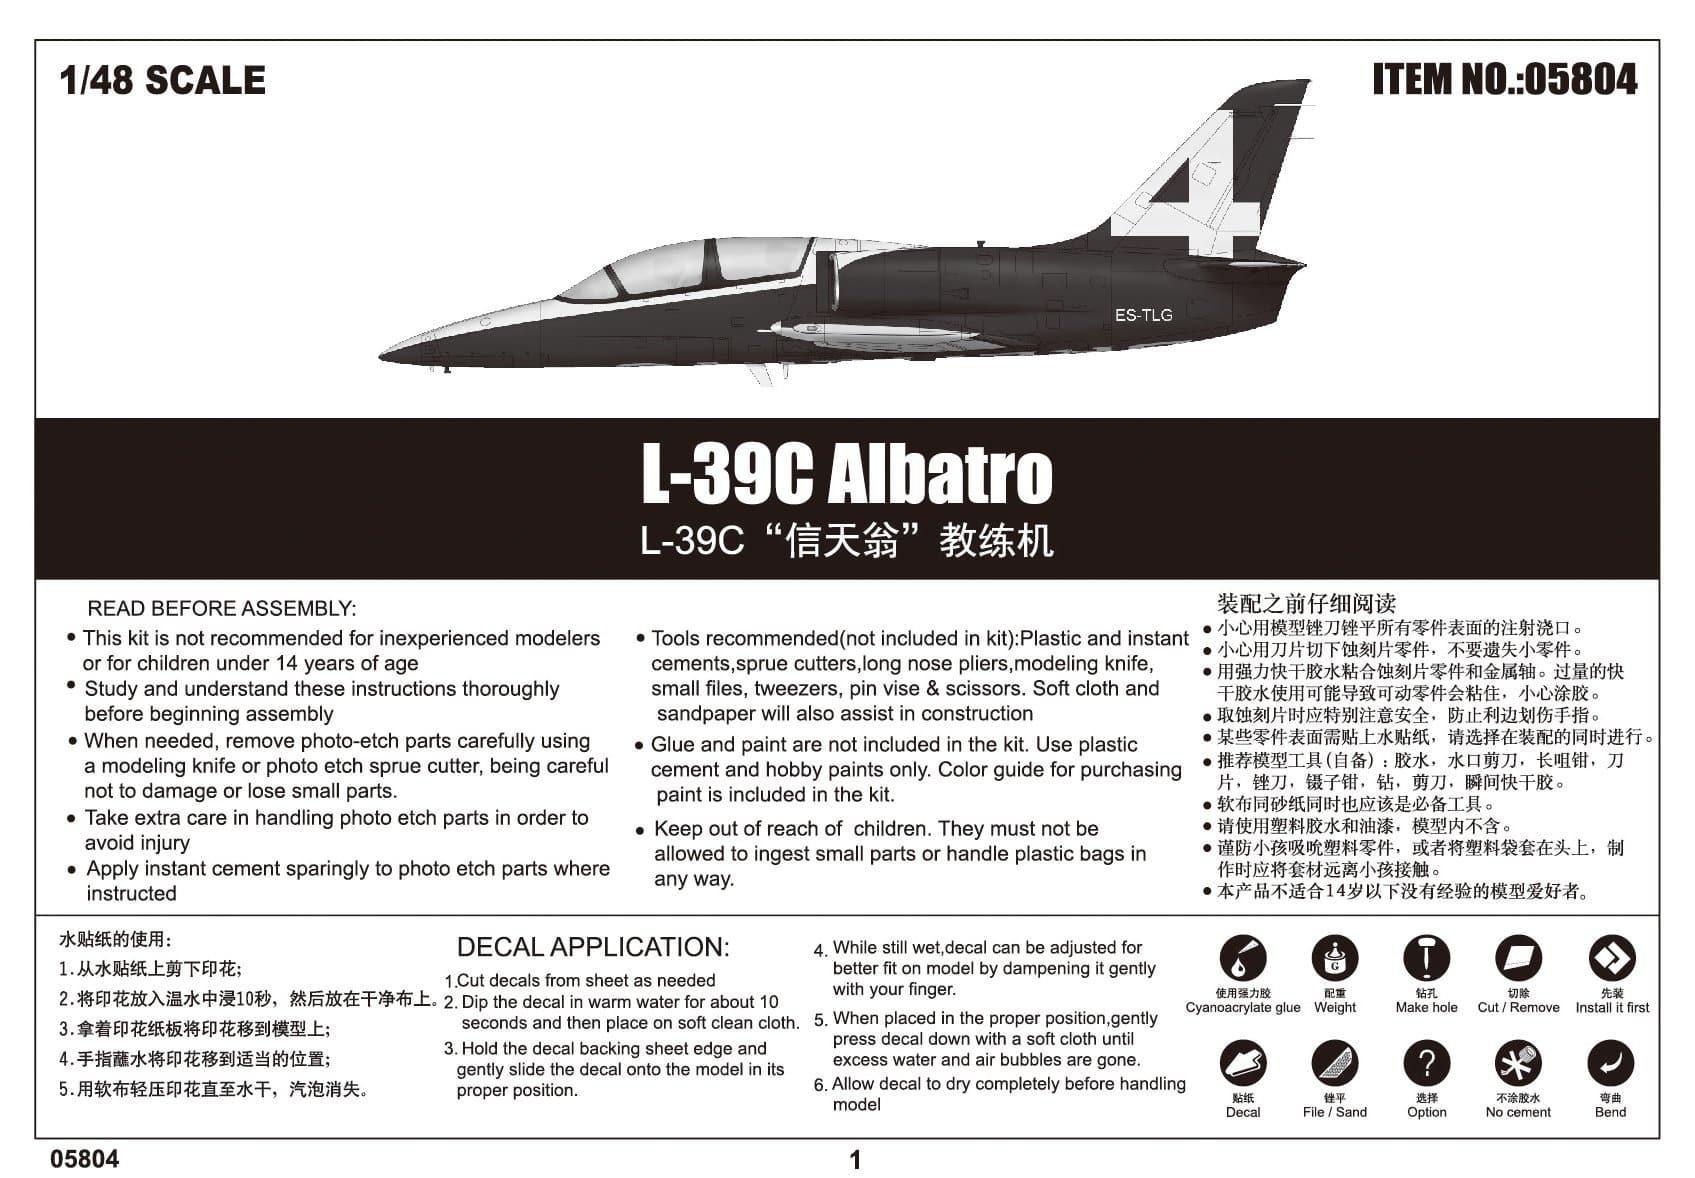 Trumpeter - 1:48 L-39C Albatro Fighter Assembly Kit